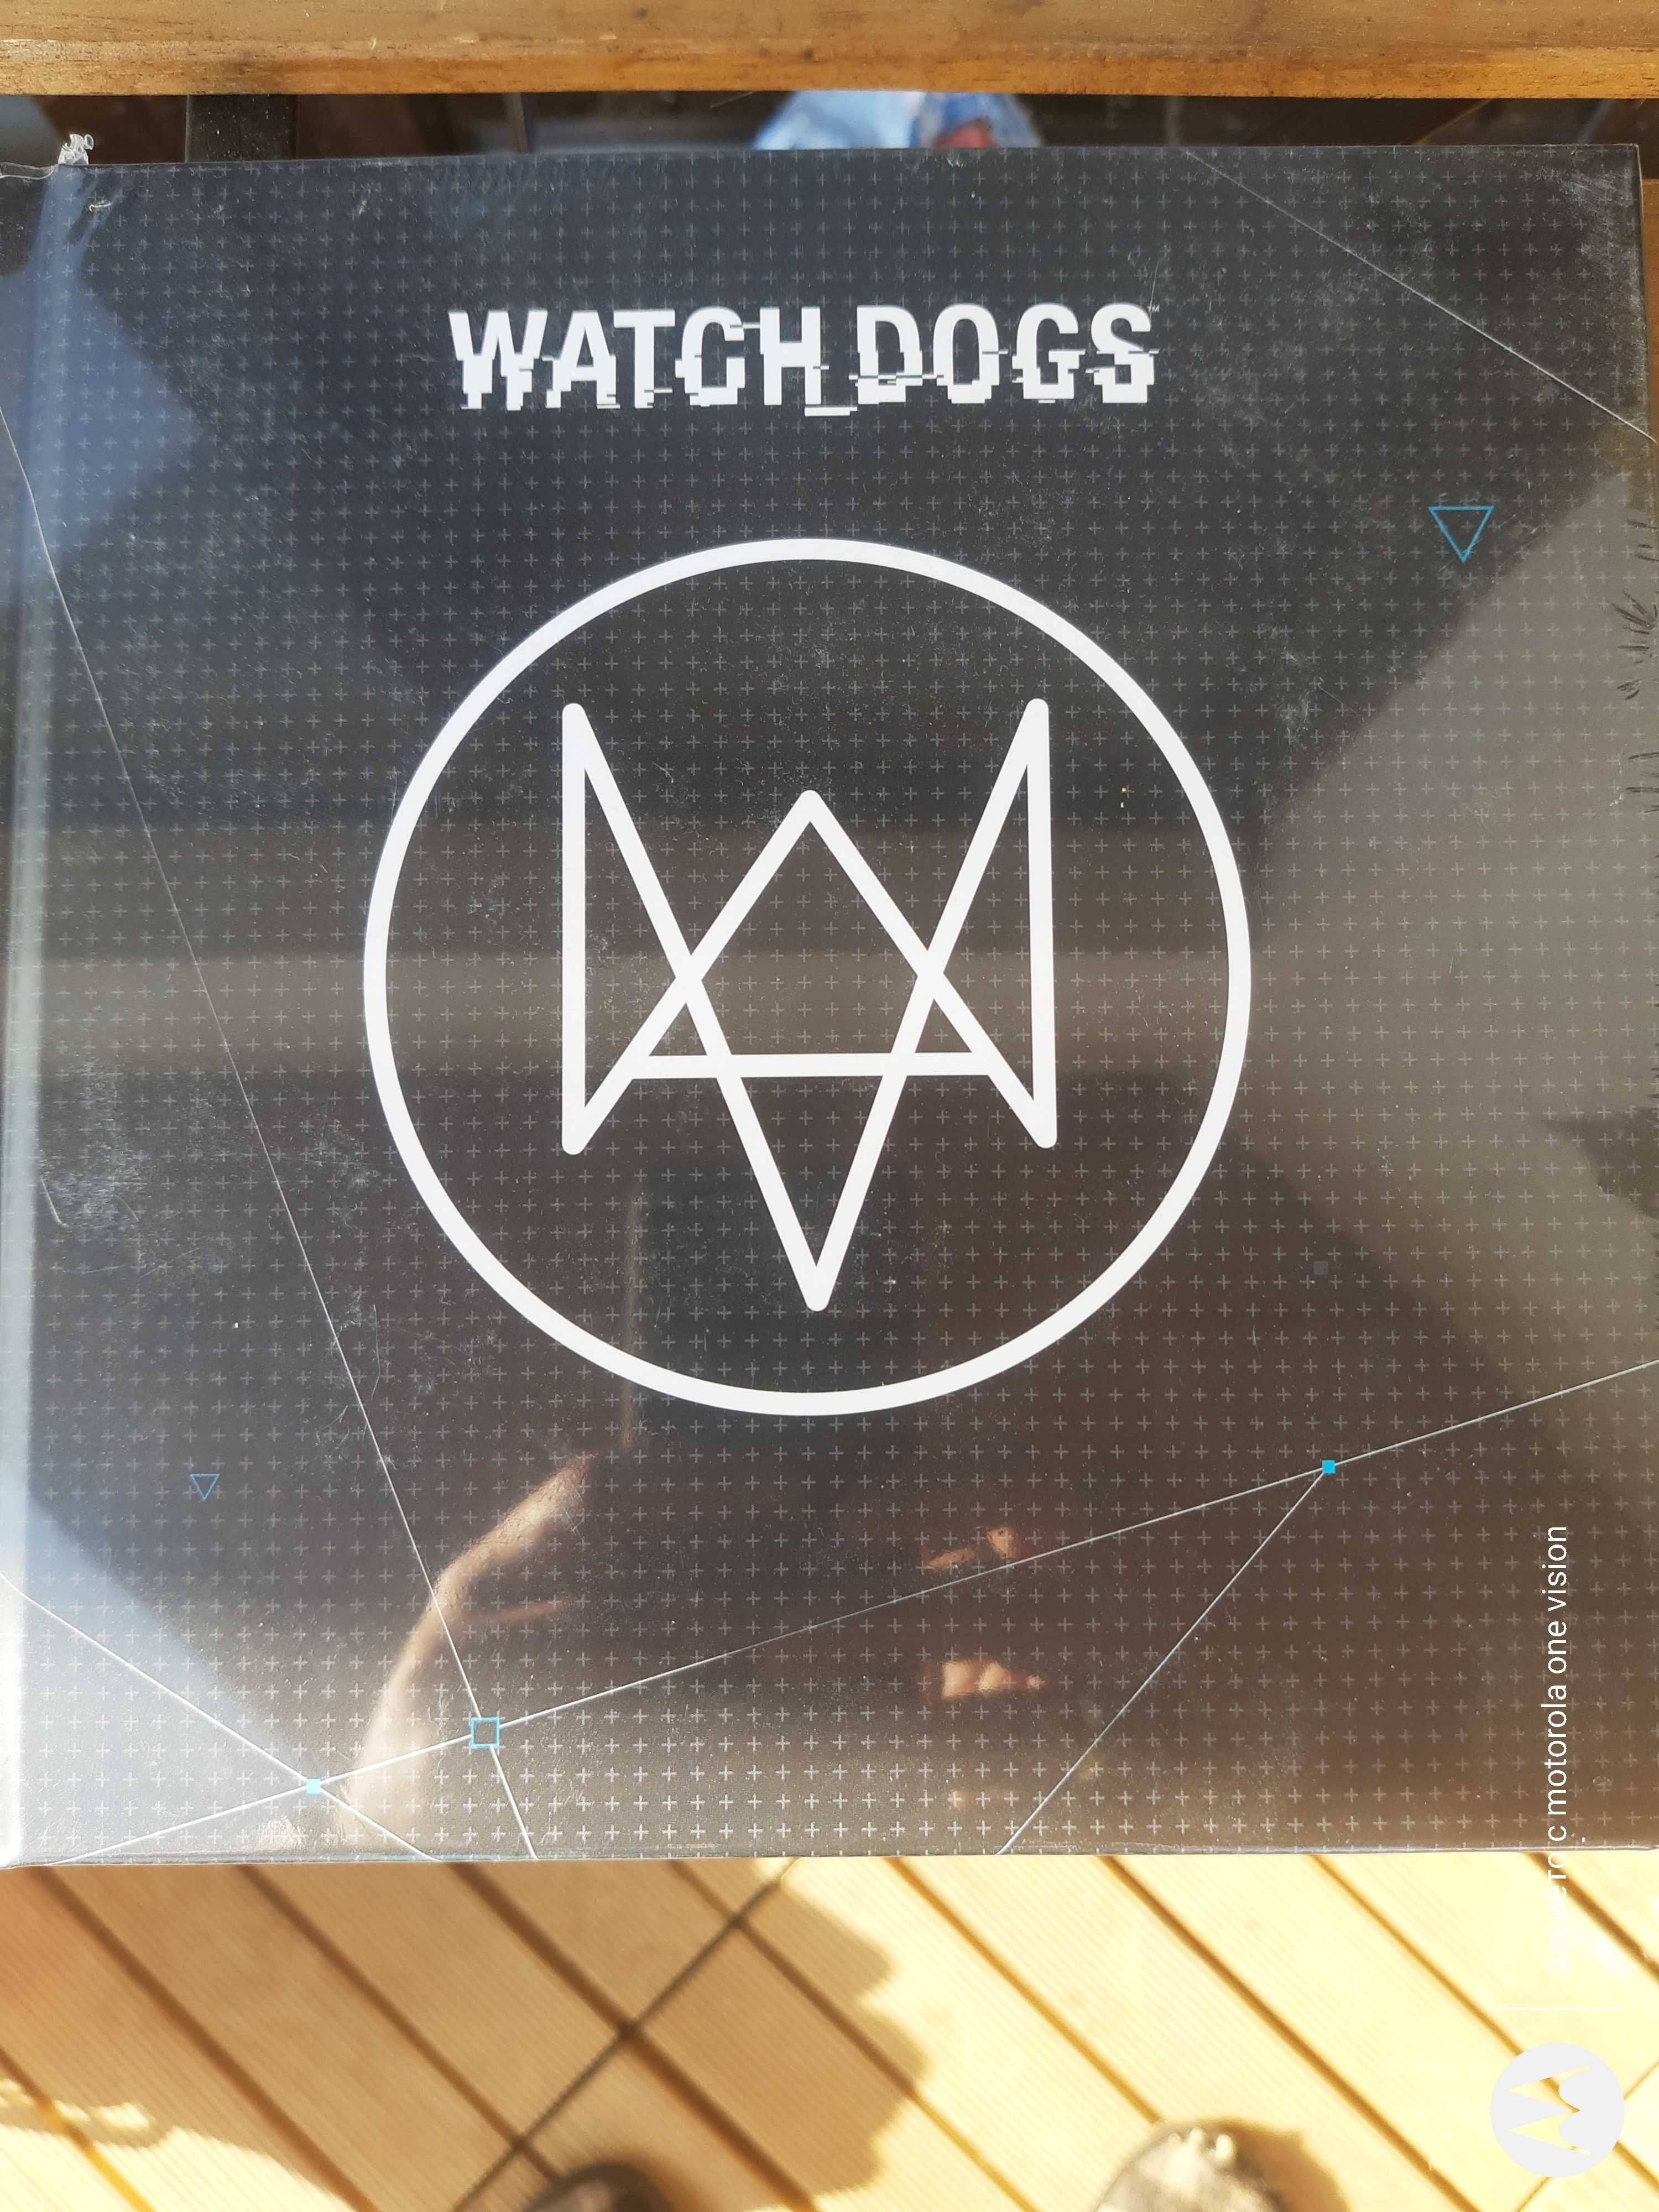 Watch dogs artbook